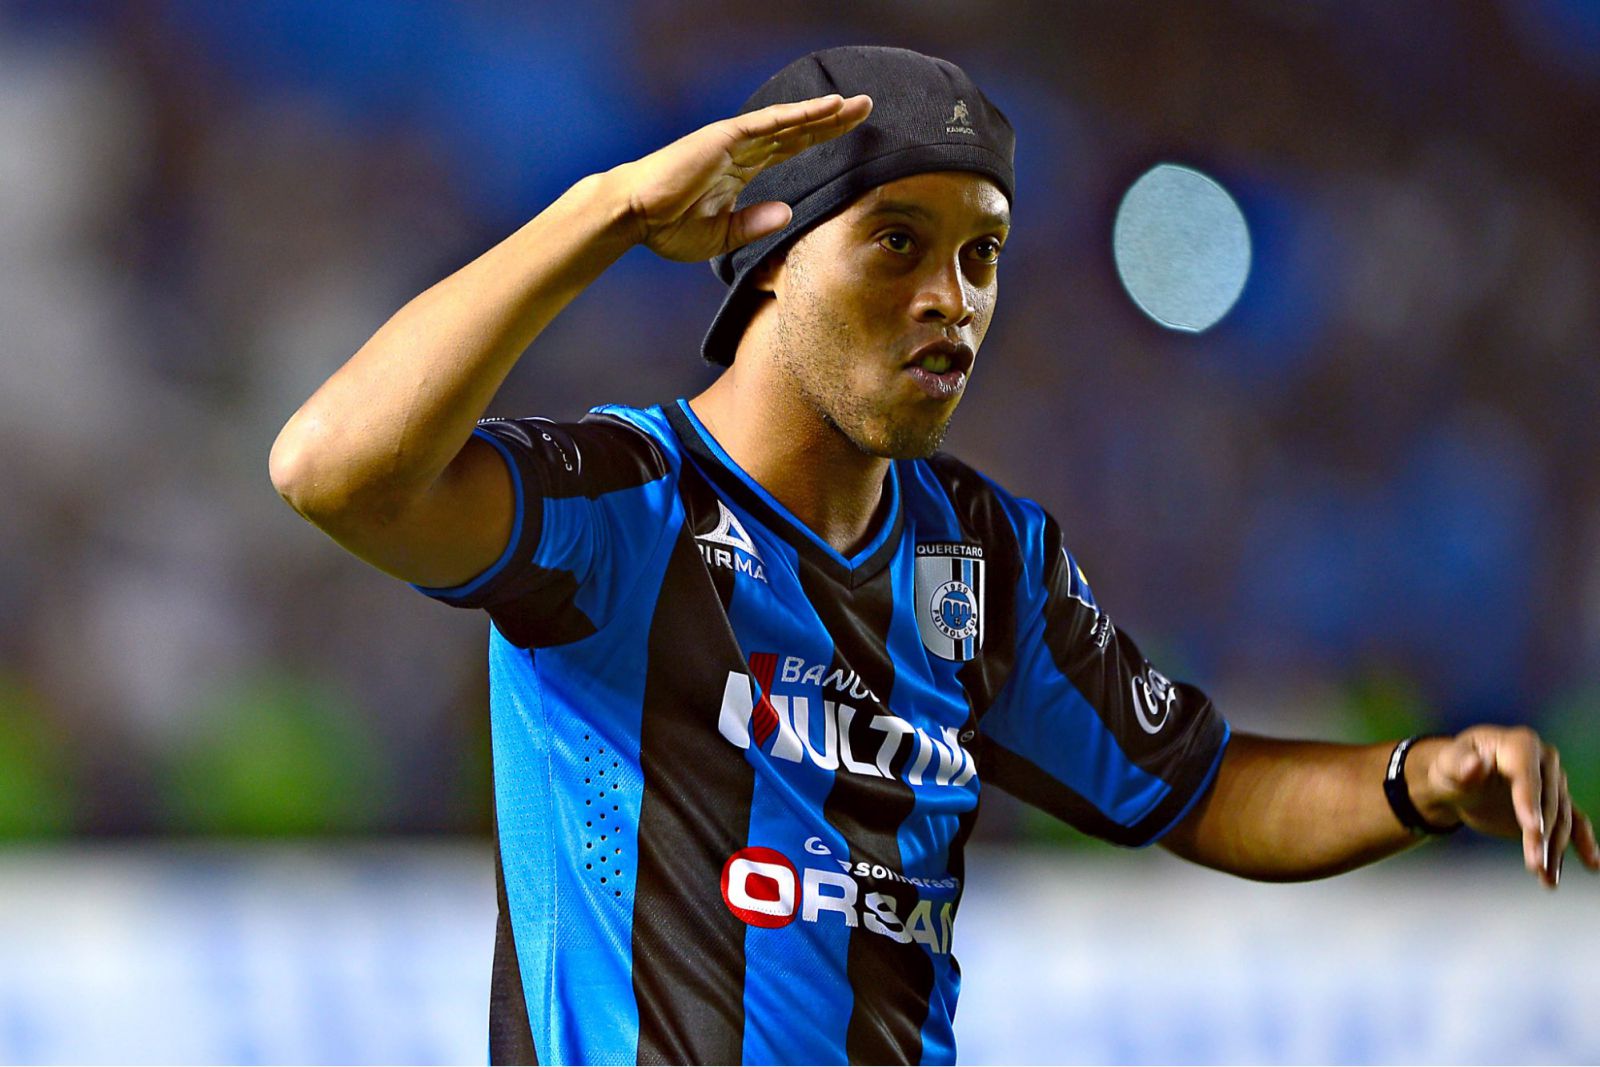 tong so ban thang cua Ronaldinho 02 jpg